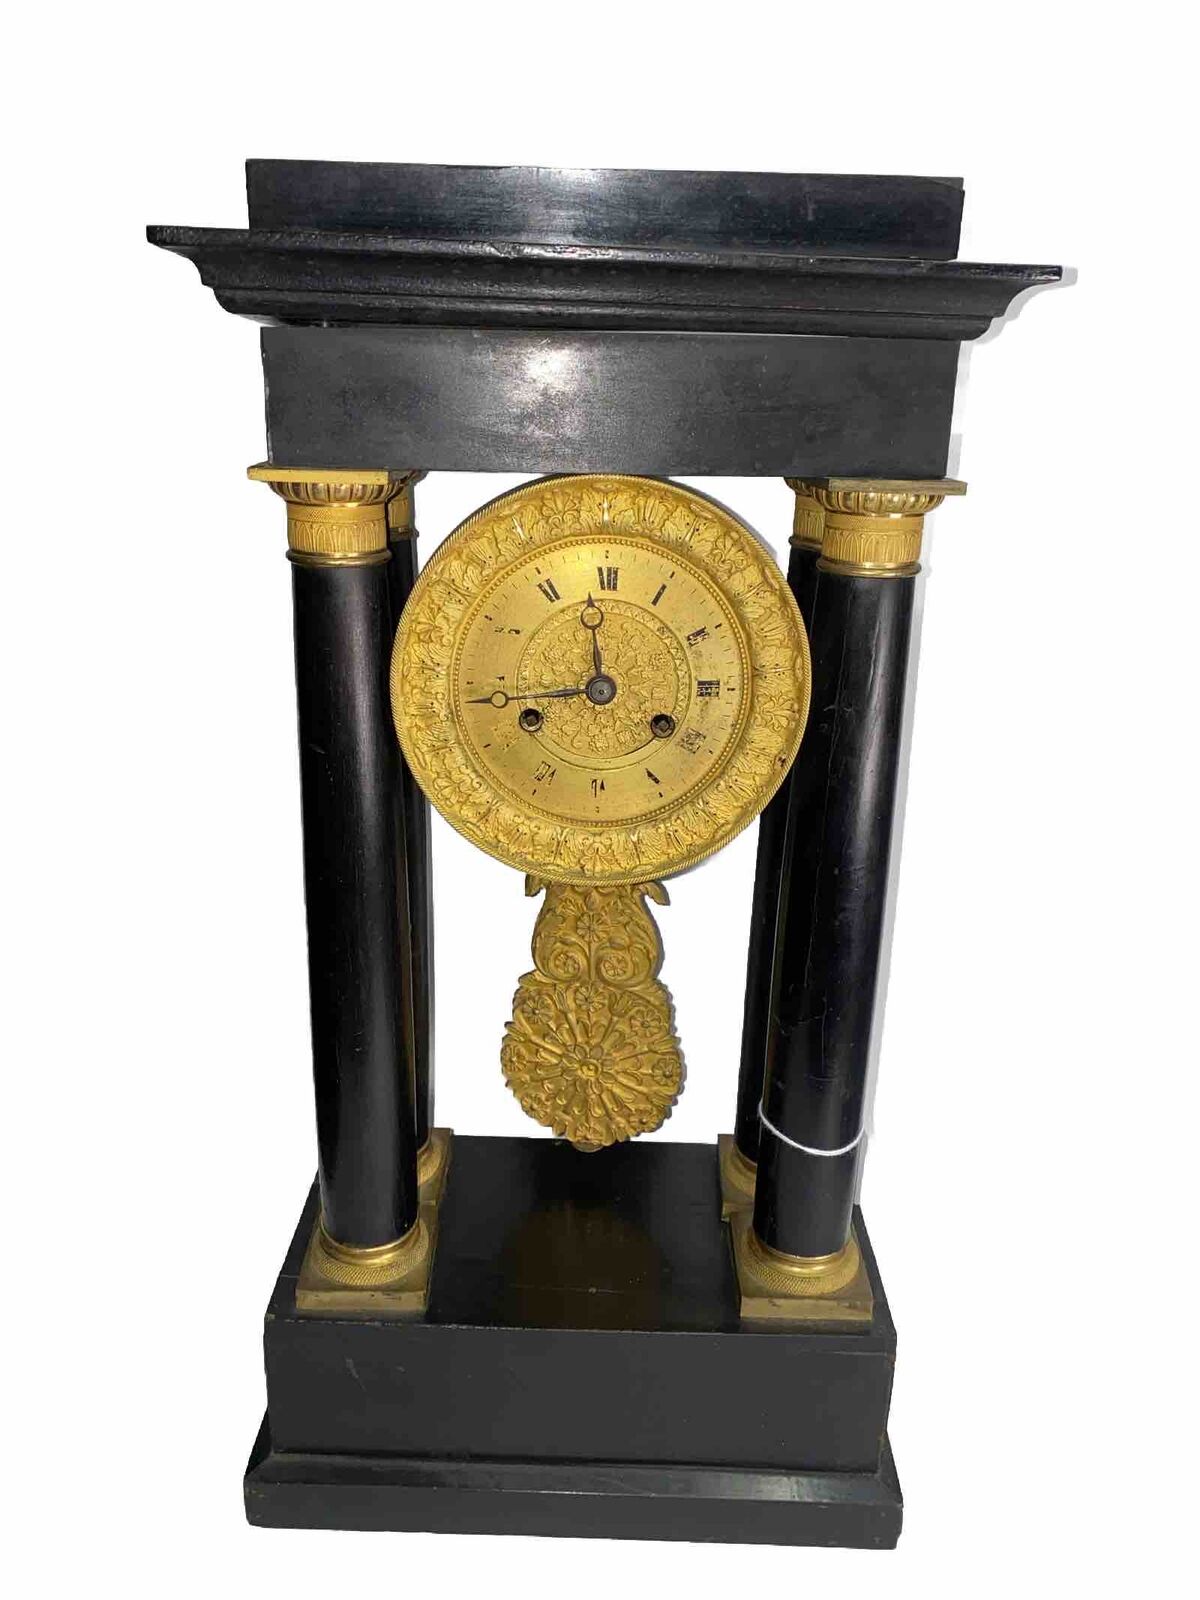 Antique C. 1840’s French Empire Mantle Clock W/ Tall Pillars Needs Repair.